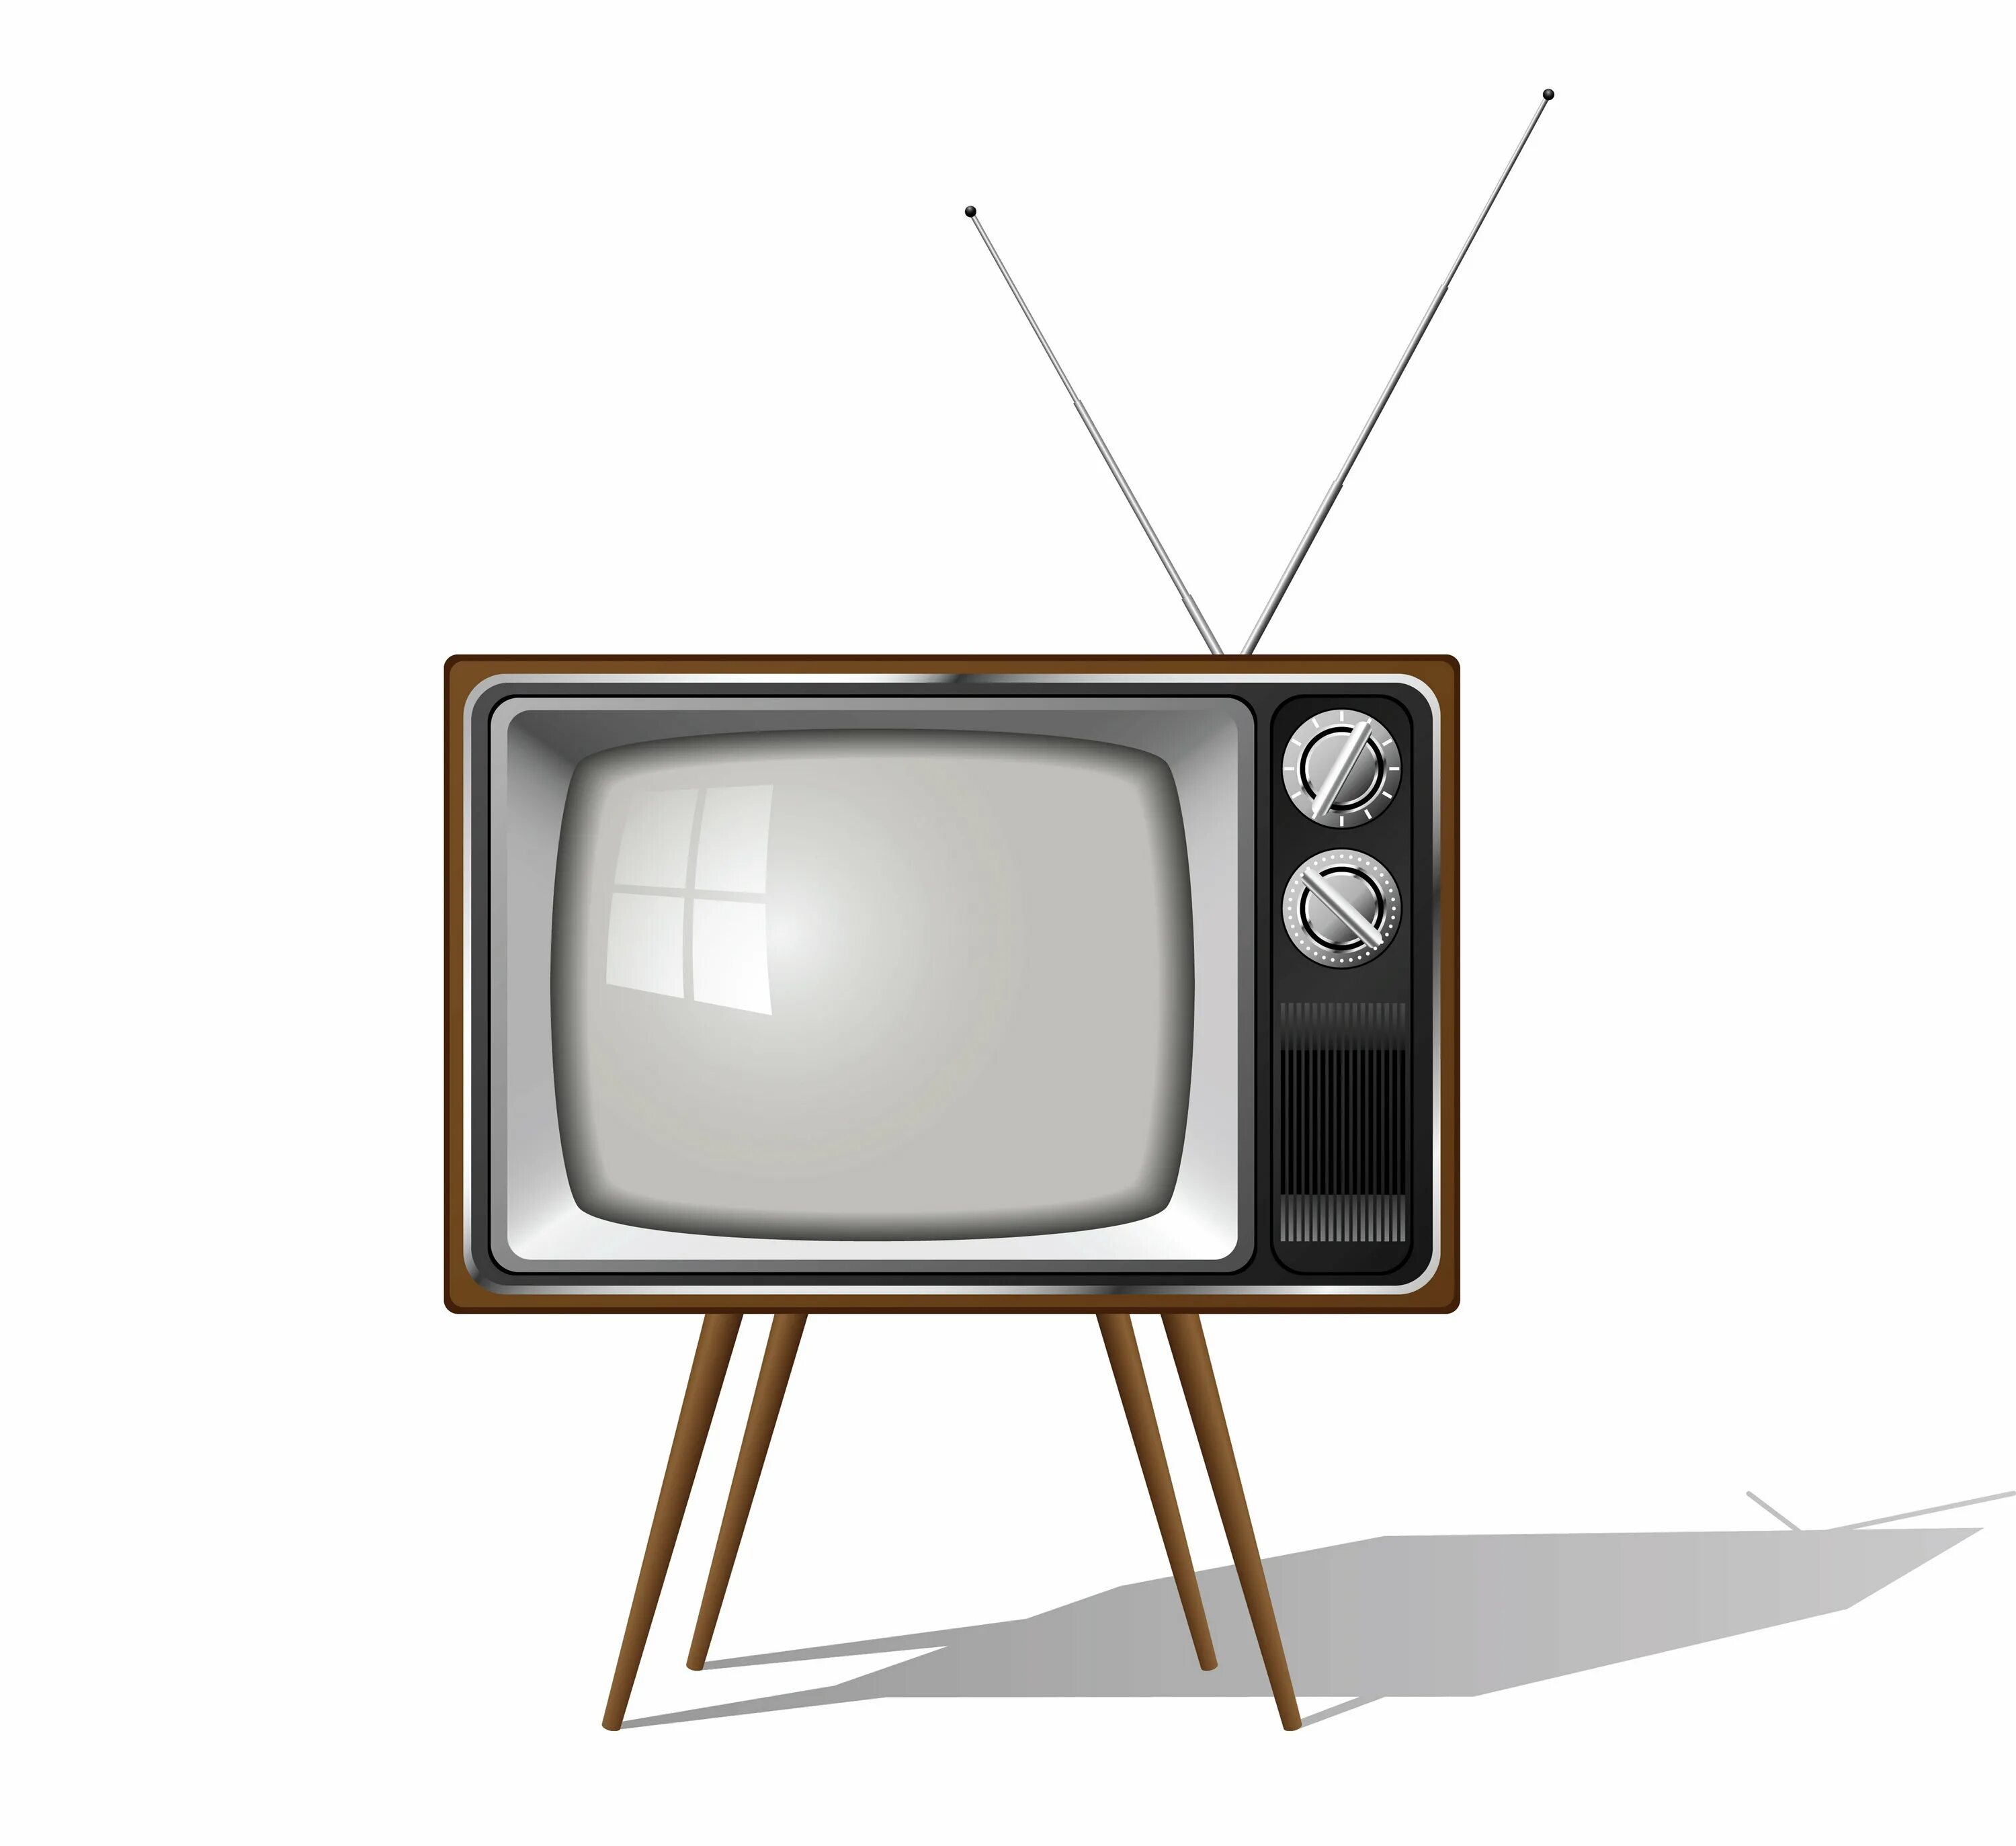 Телевизор 5 букв. Старый телевизор. Старинный телевизор. Телевизор на белом фоне. Телевизор без фона.